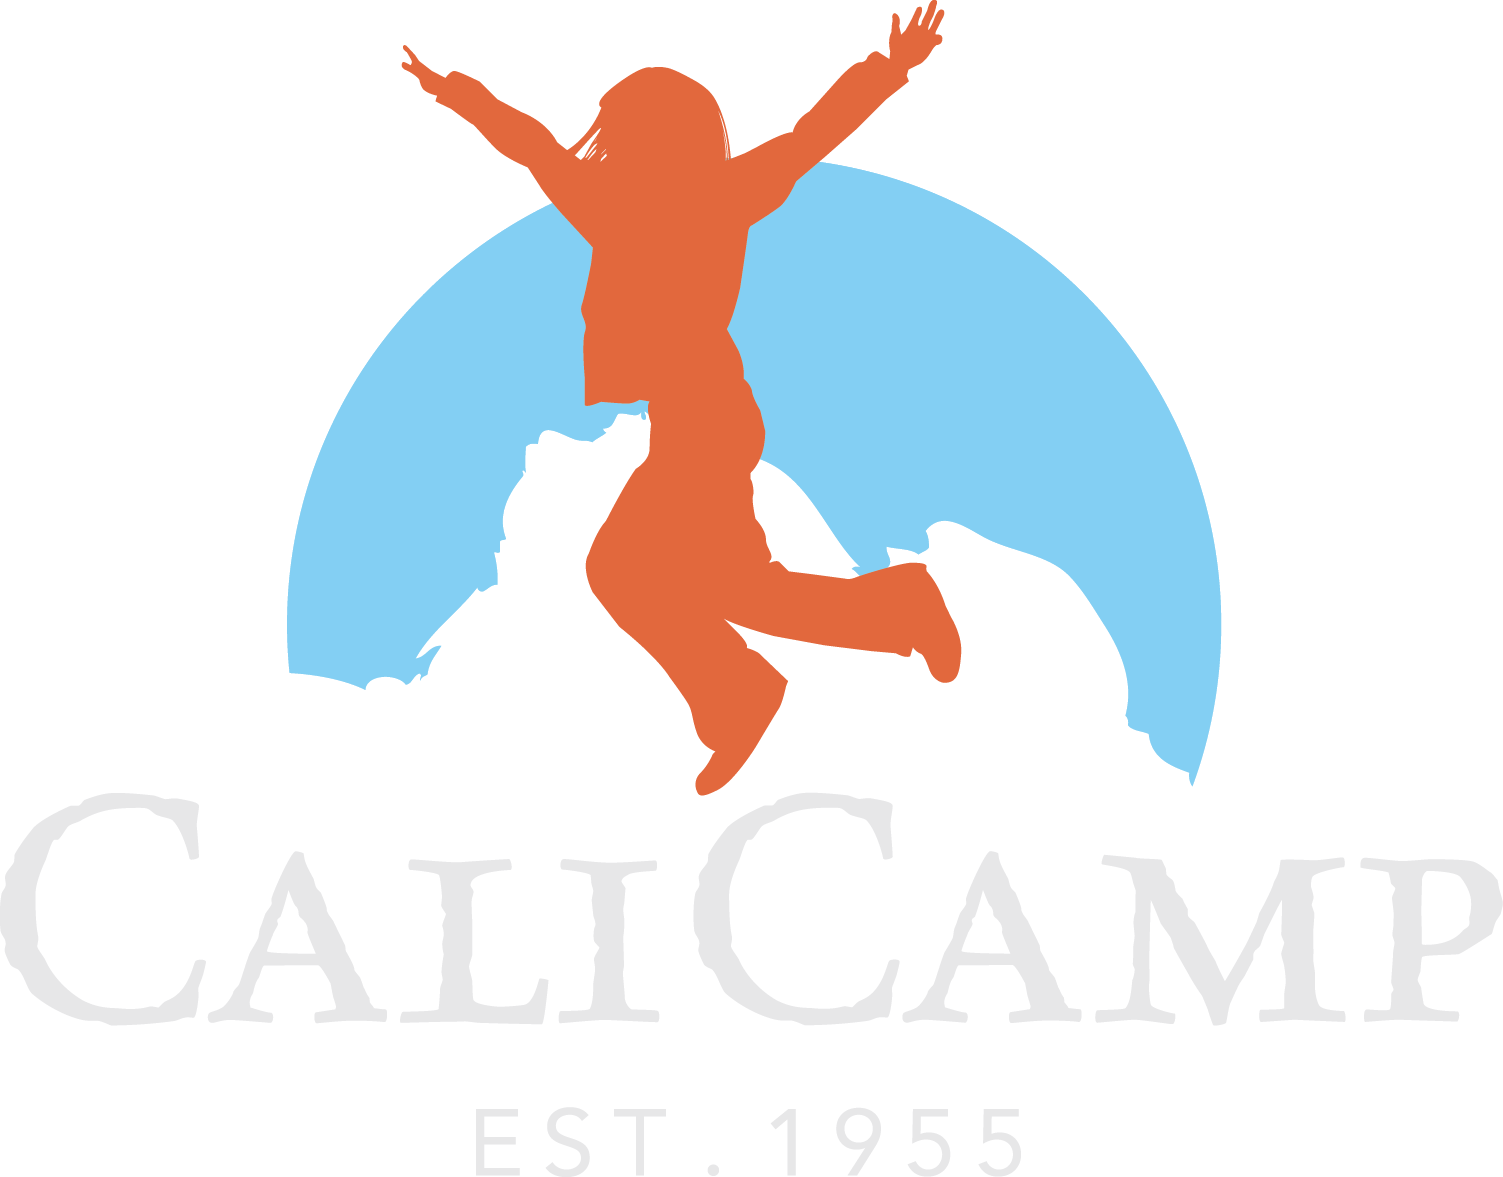 Kalli Camp Academy Blog